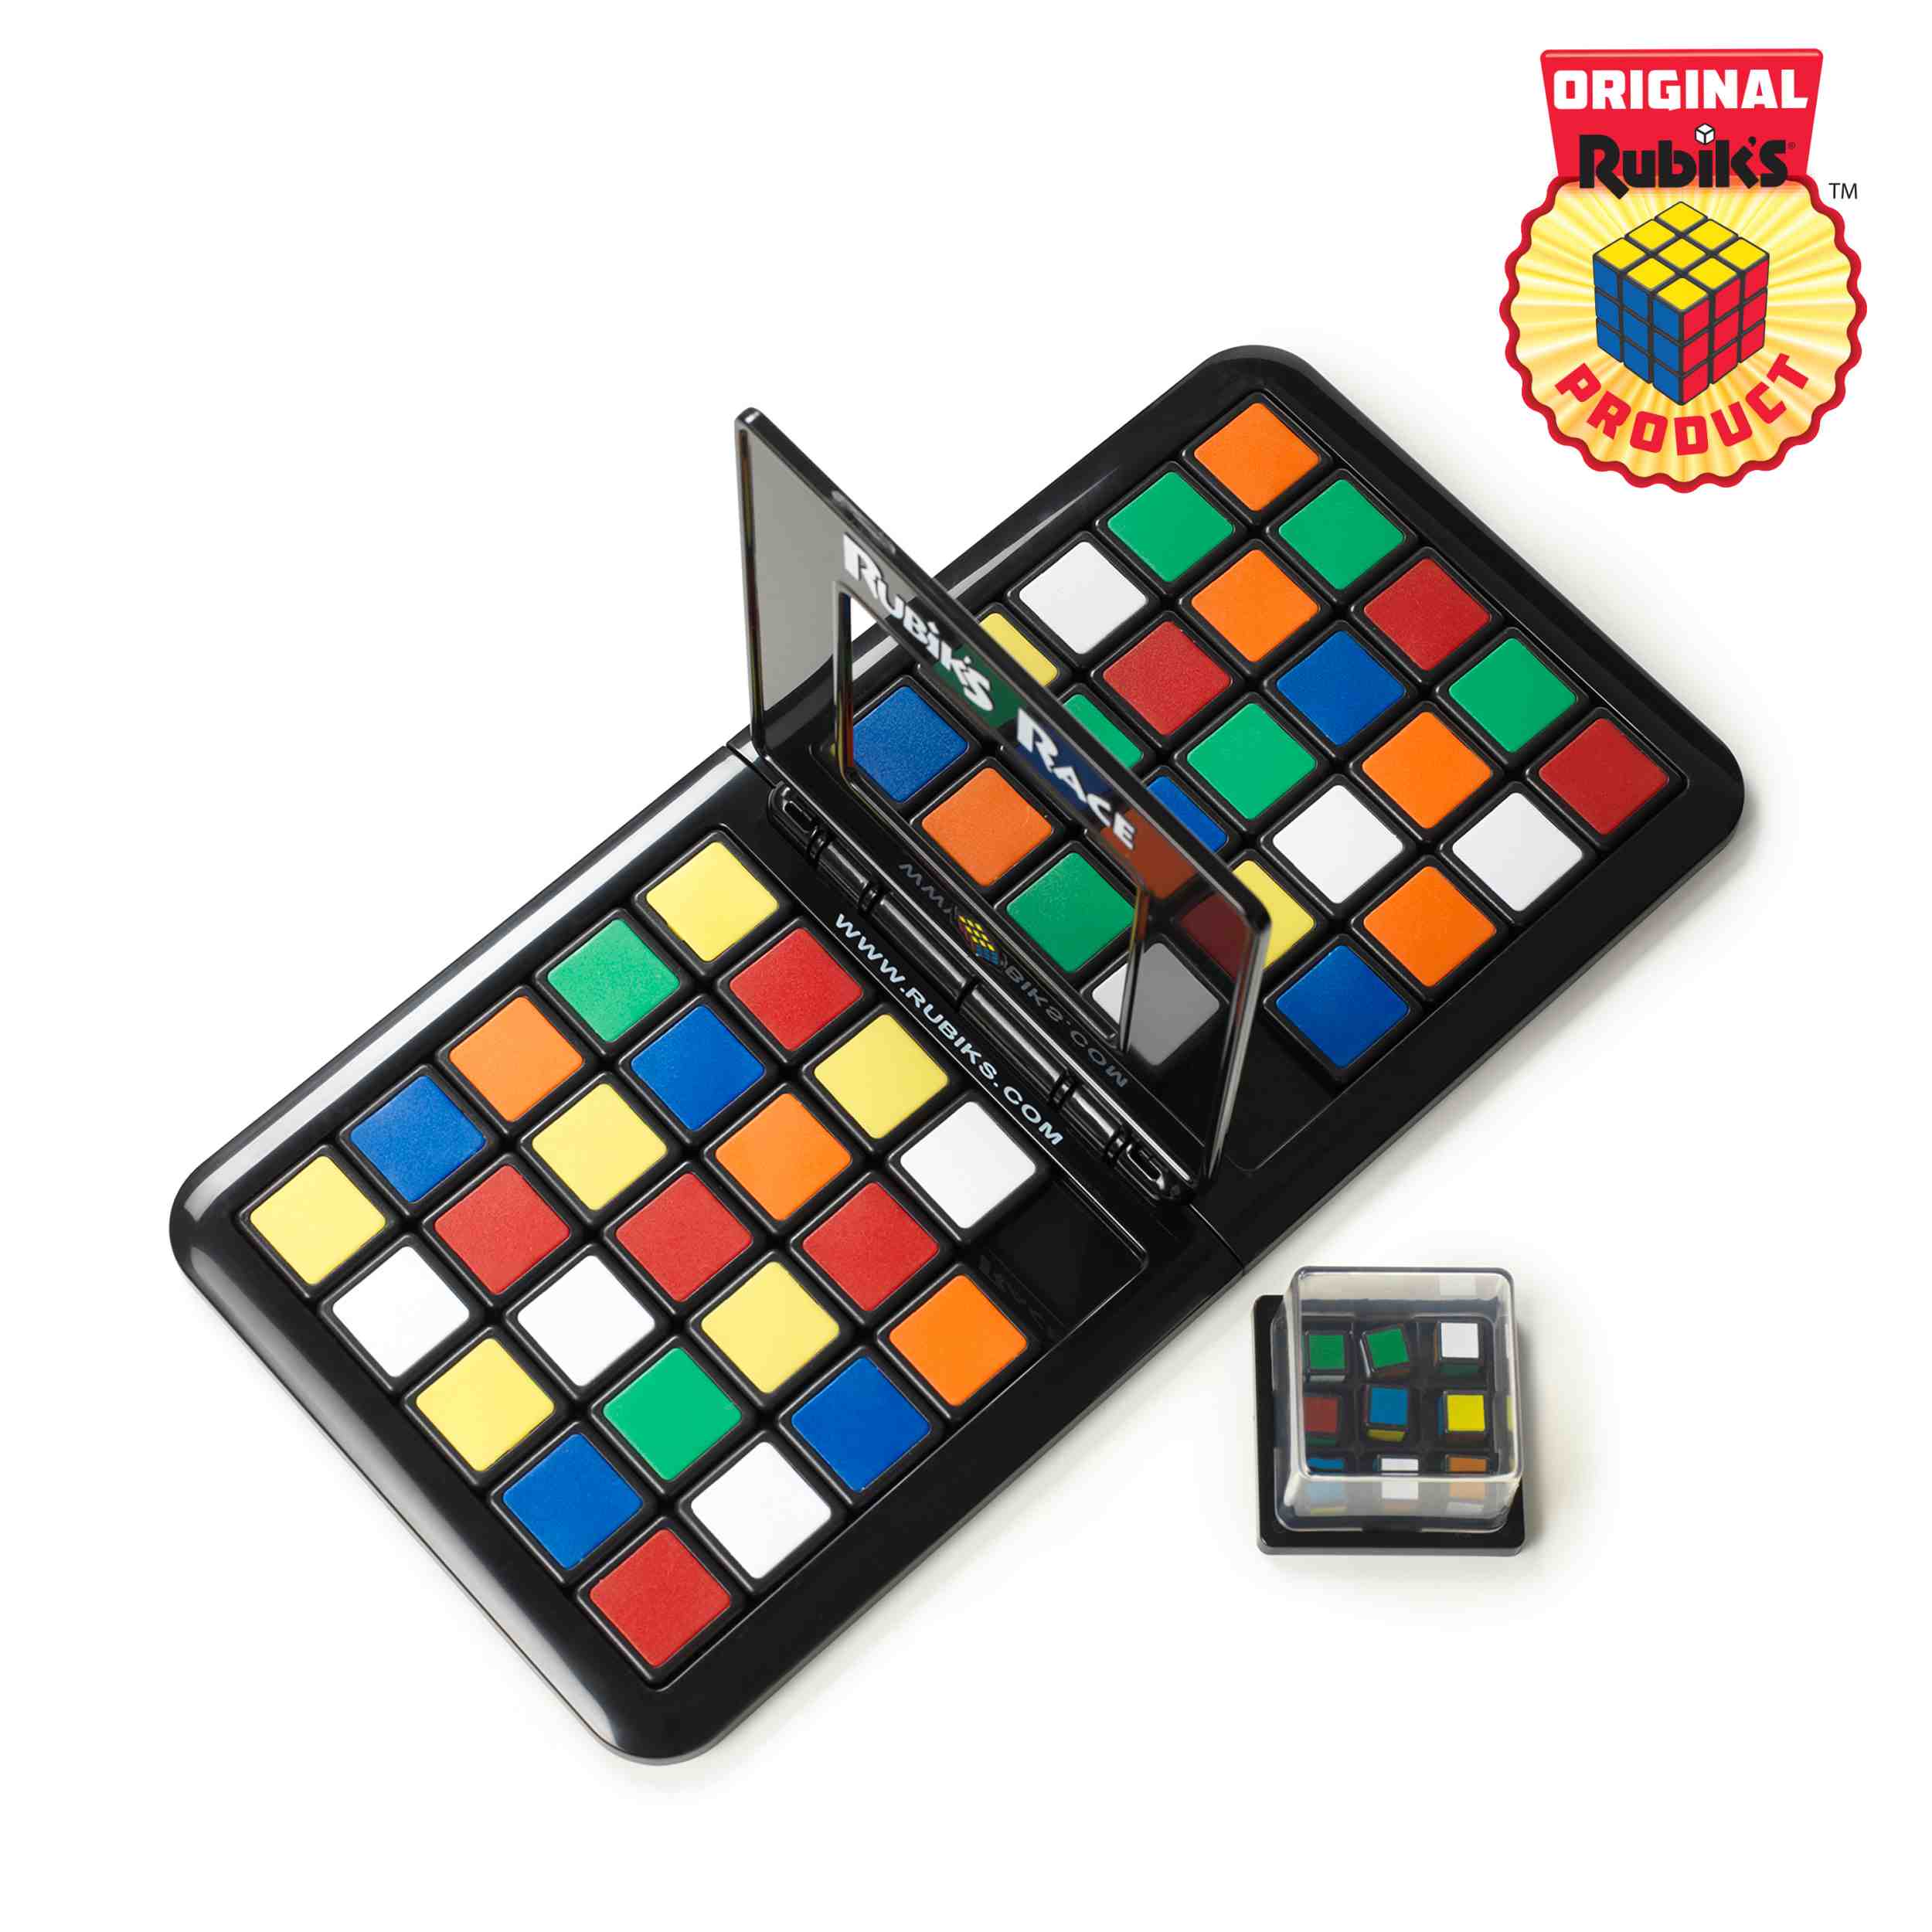 Rubik’s Race Επιτραπέζιο Παιχνίδι - Νεο 6067243 - Rubik's